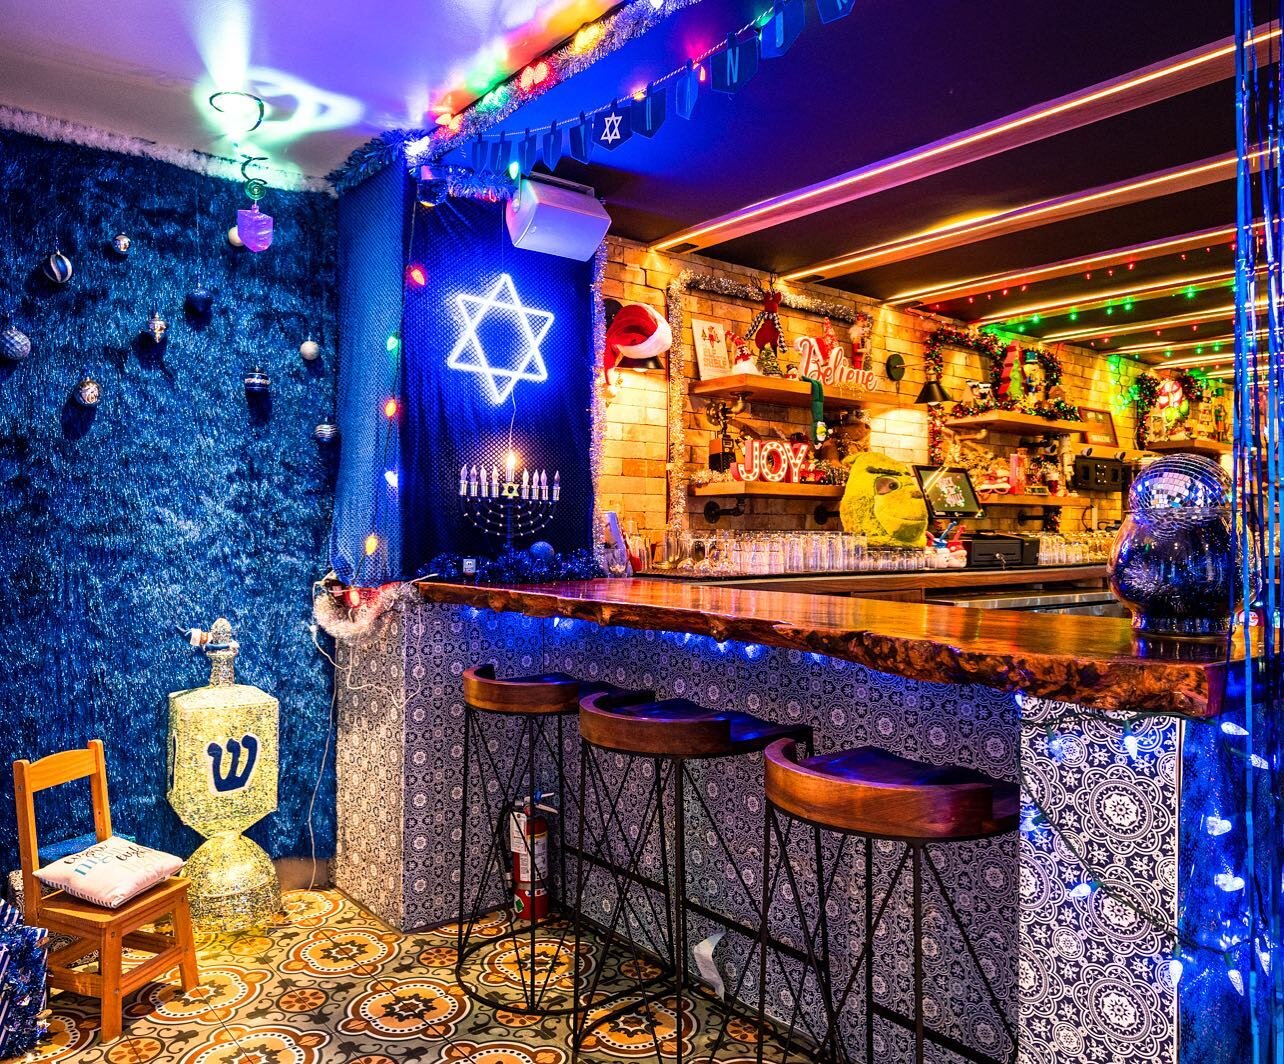 First night of Hanukkah! Join us at Dreidel Bar at 2030 Lombard Street for a Manischewitz Spritz or a Home for the Challah-Days 🍸

#hanukkah @manischewitzco #drinklocal #tistheseason #deckthehalls #challah #holidaycheer #dreidelbar #dreidel